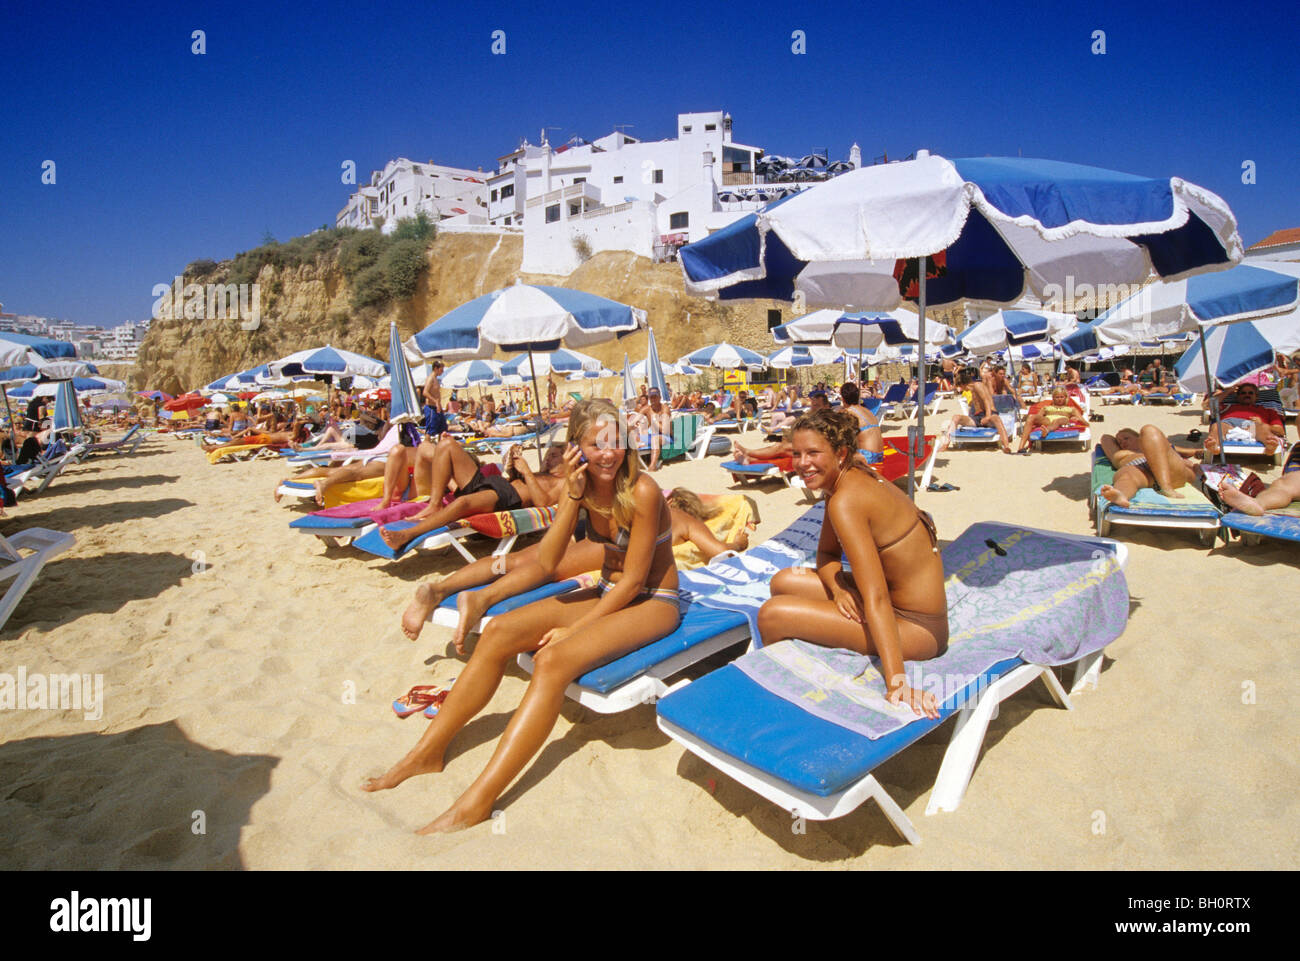 telephoning-girl-people-on-the-beach-under-blue-sky-albufeira-algarve-BH0RTX.jpg